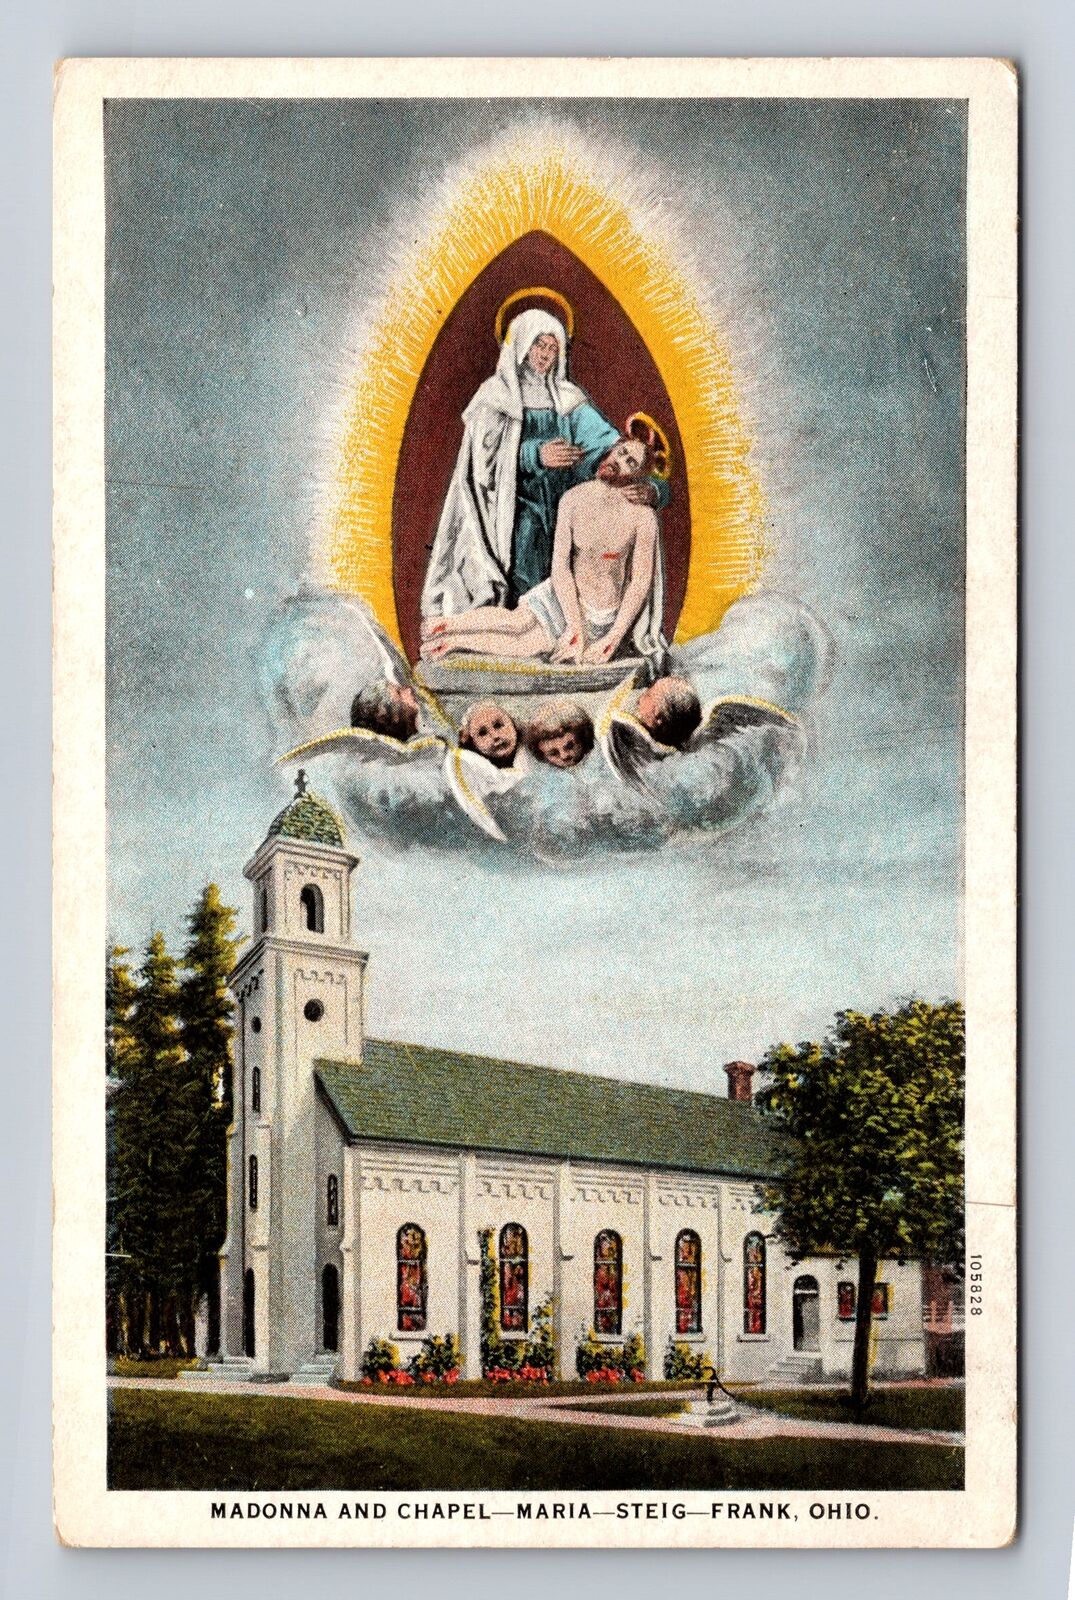 Frank OH-Ohio, Chapel & Madonna, Maria - Steig, Shrine Souvenir Vintage Postcard